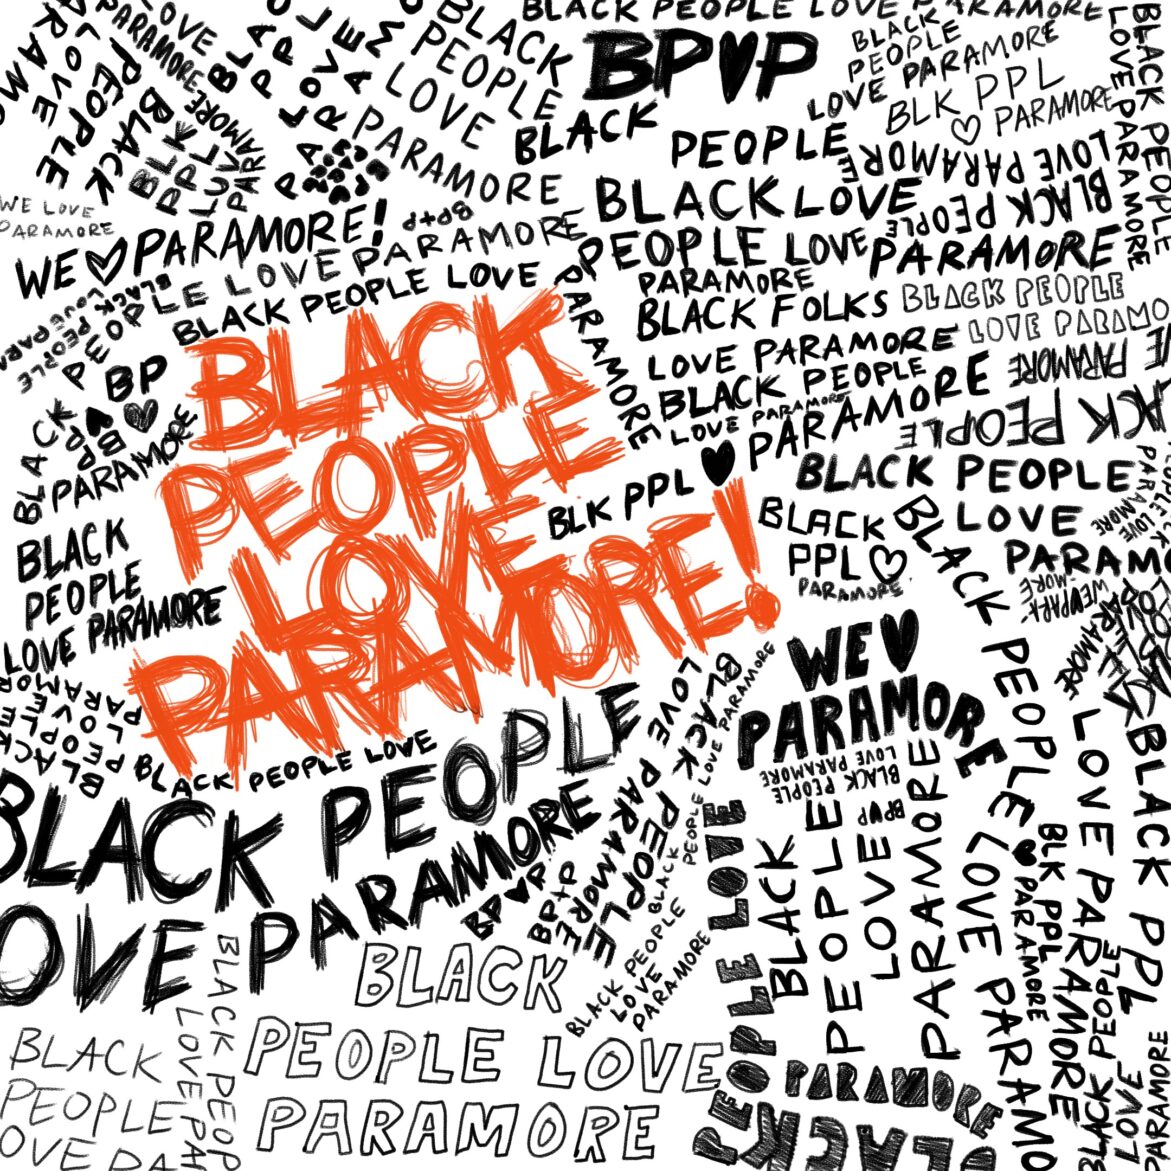 Black Podcasting - Black People Love Coldplay ft. Edith (MM@TA) & Christine (ZULU)